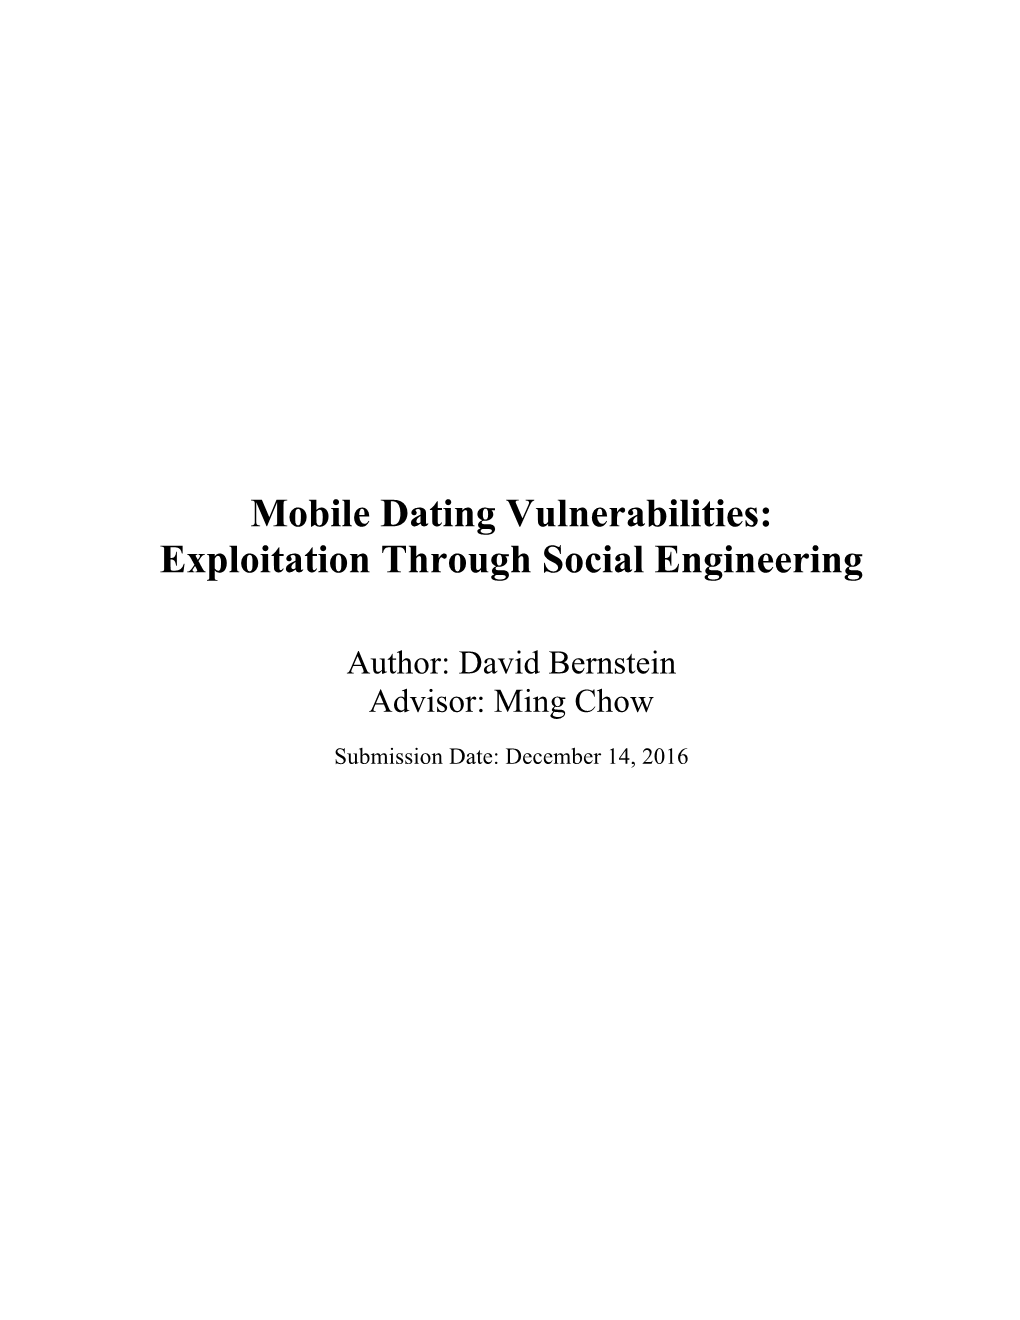 Mobile Dating Vulnerabilities: Exploitation Through Social Engineering